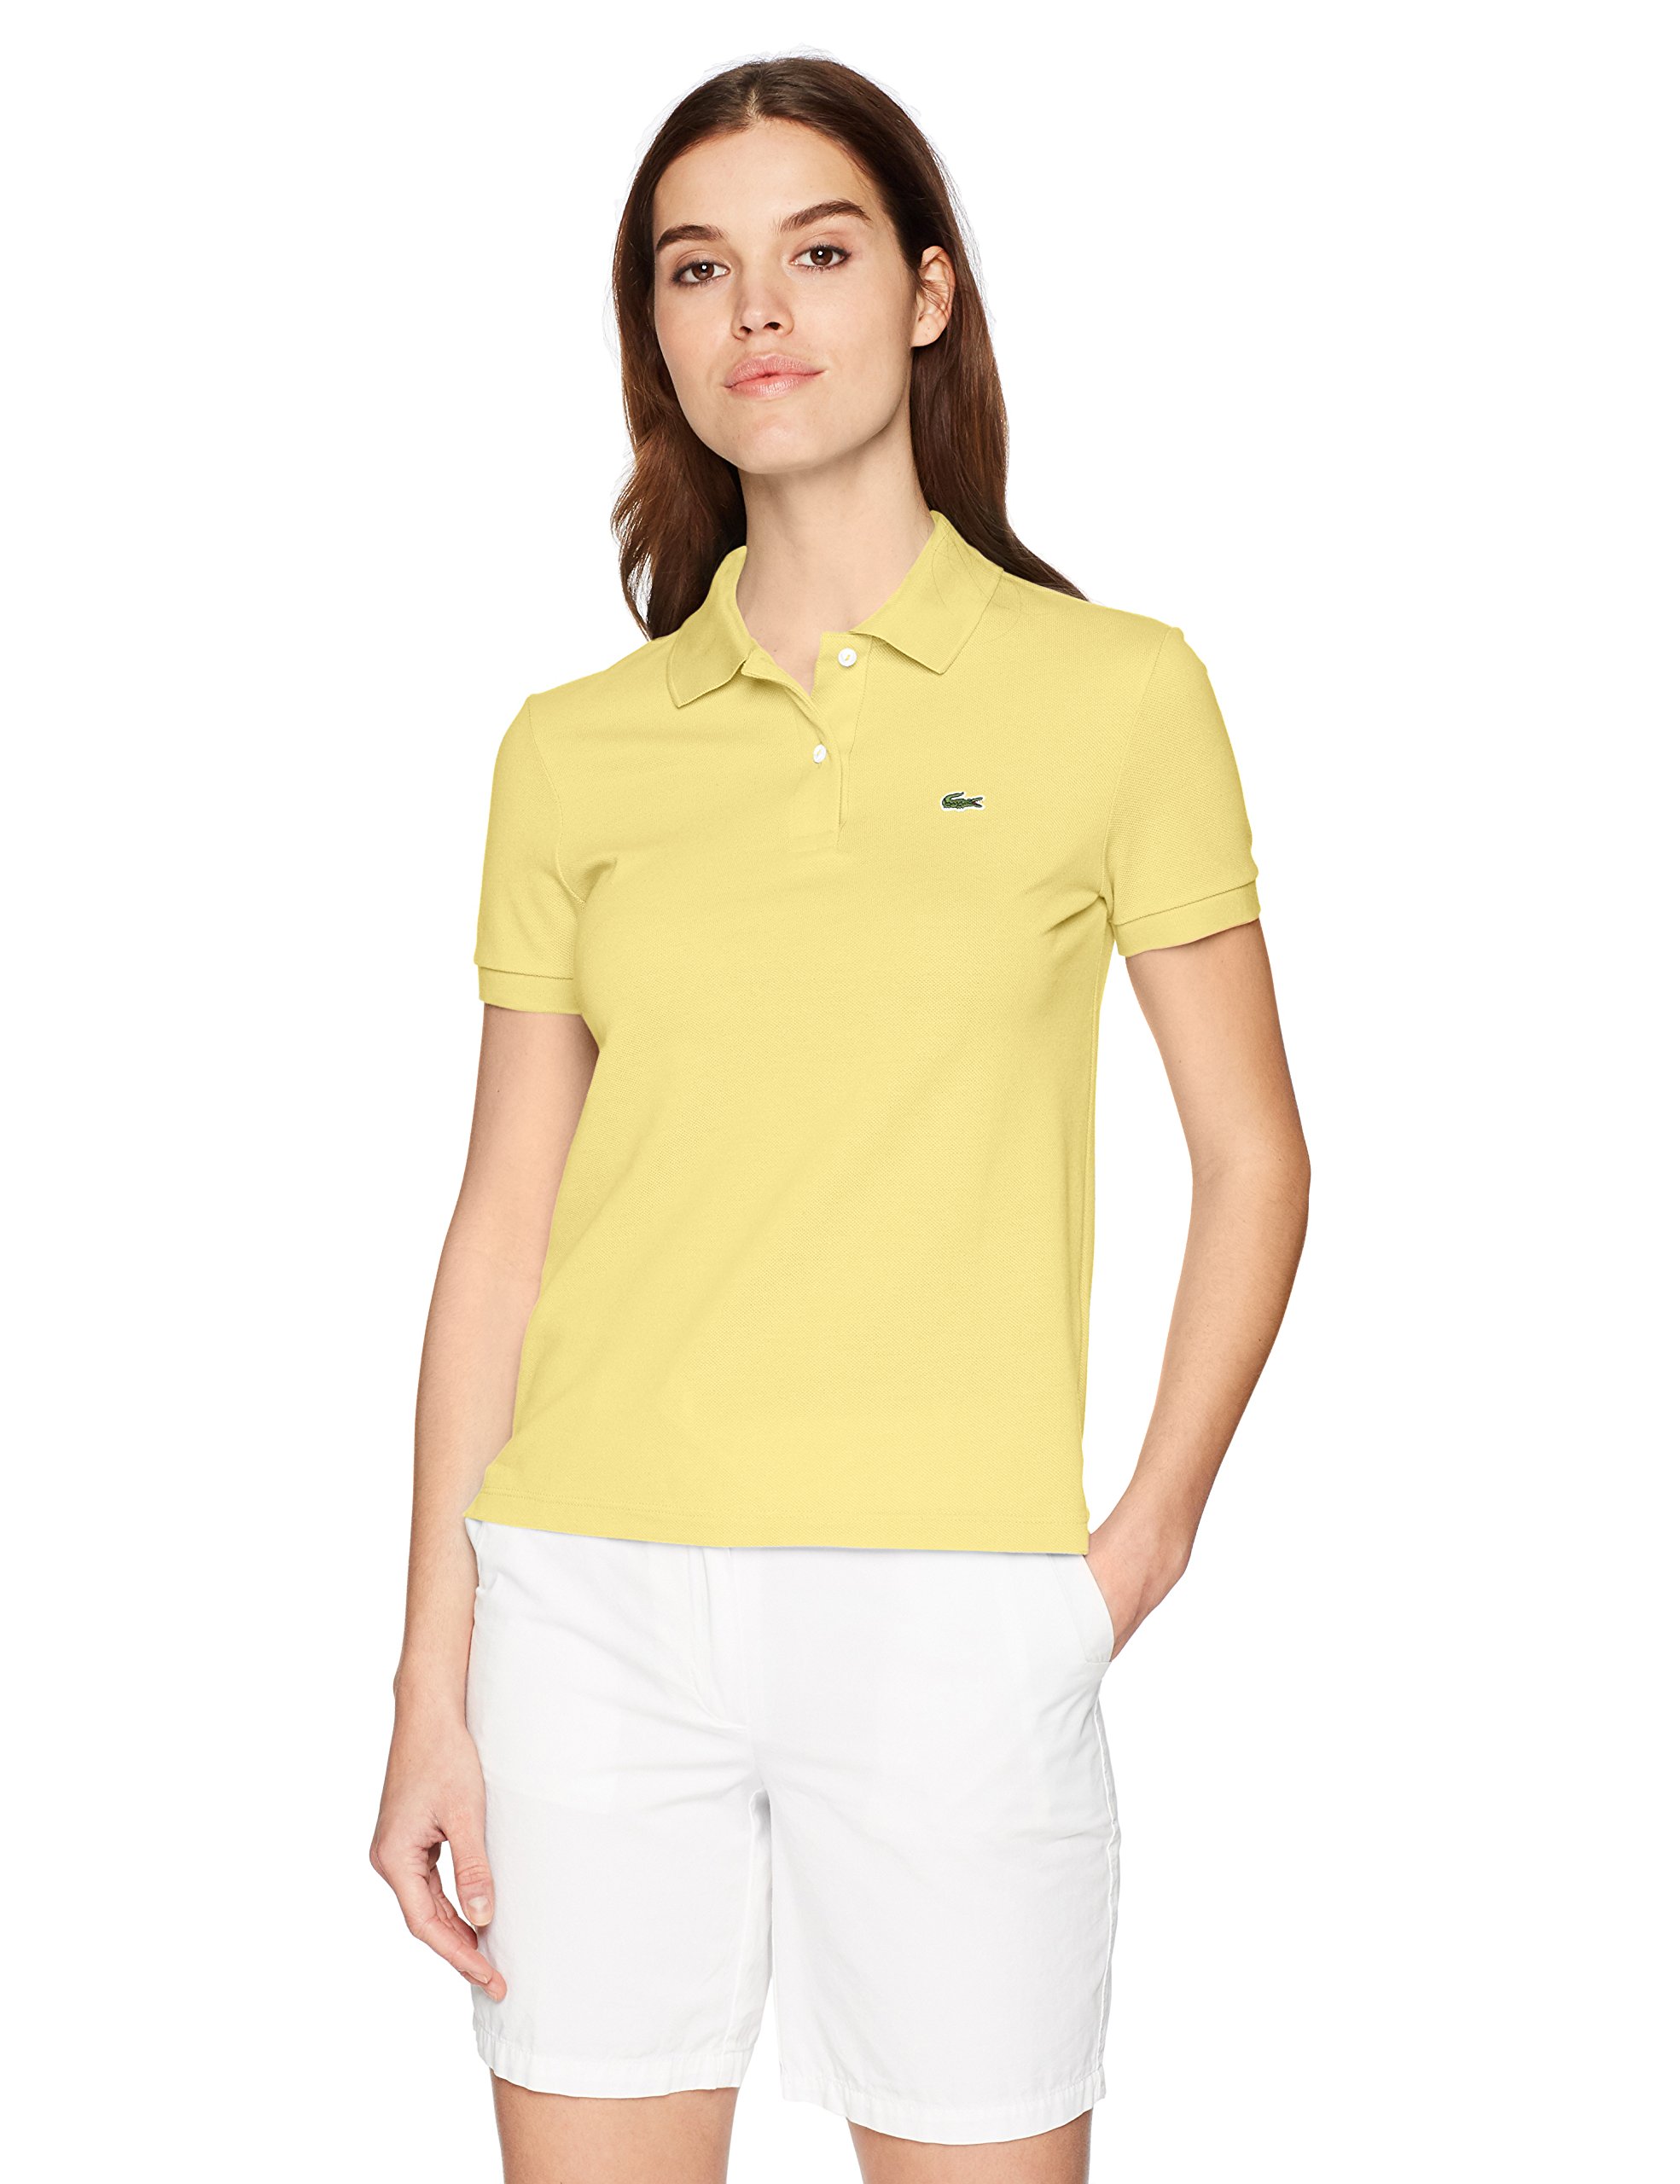 ladies yellow polo shirt